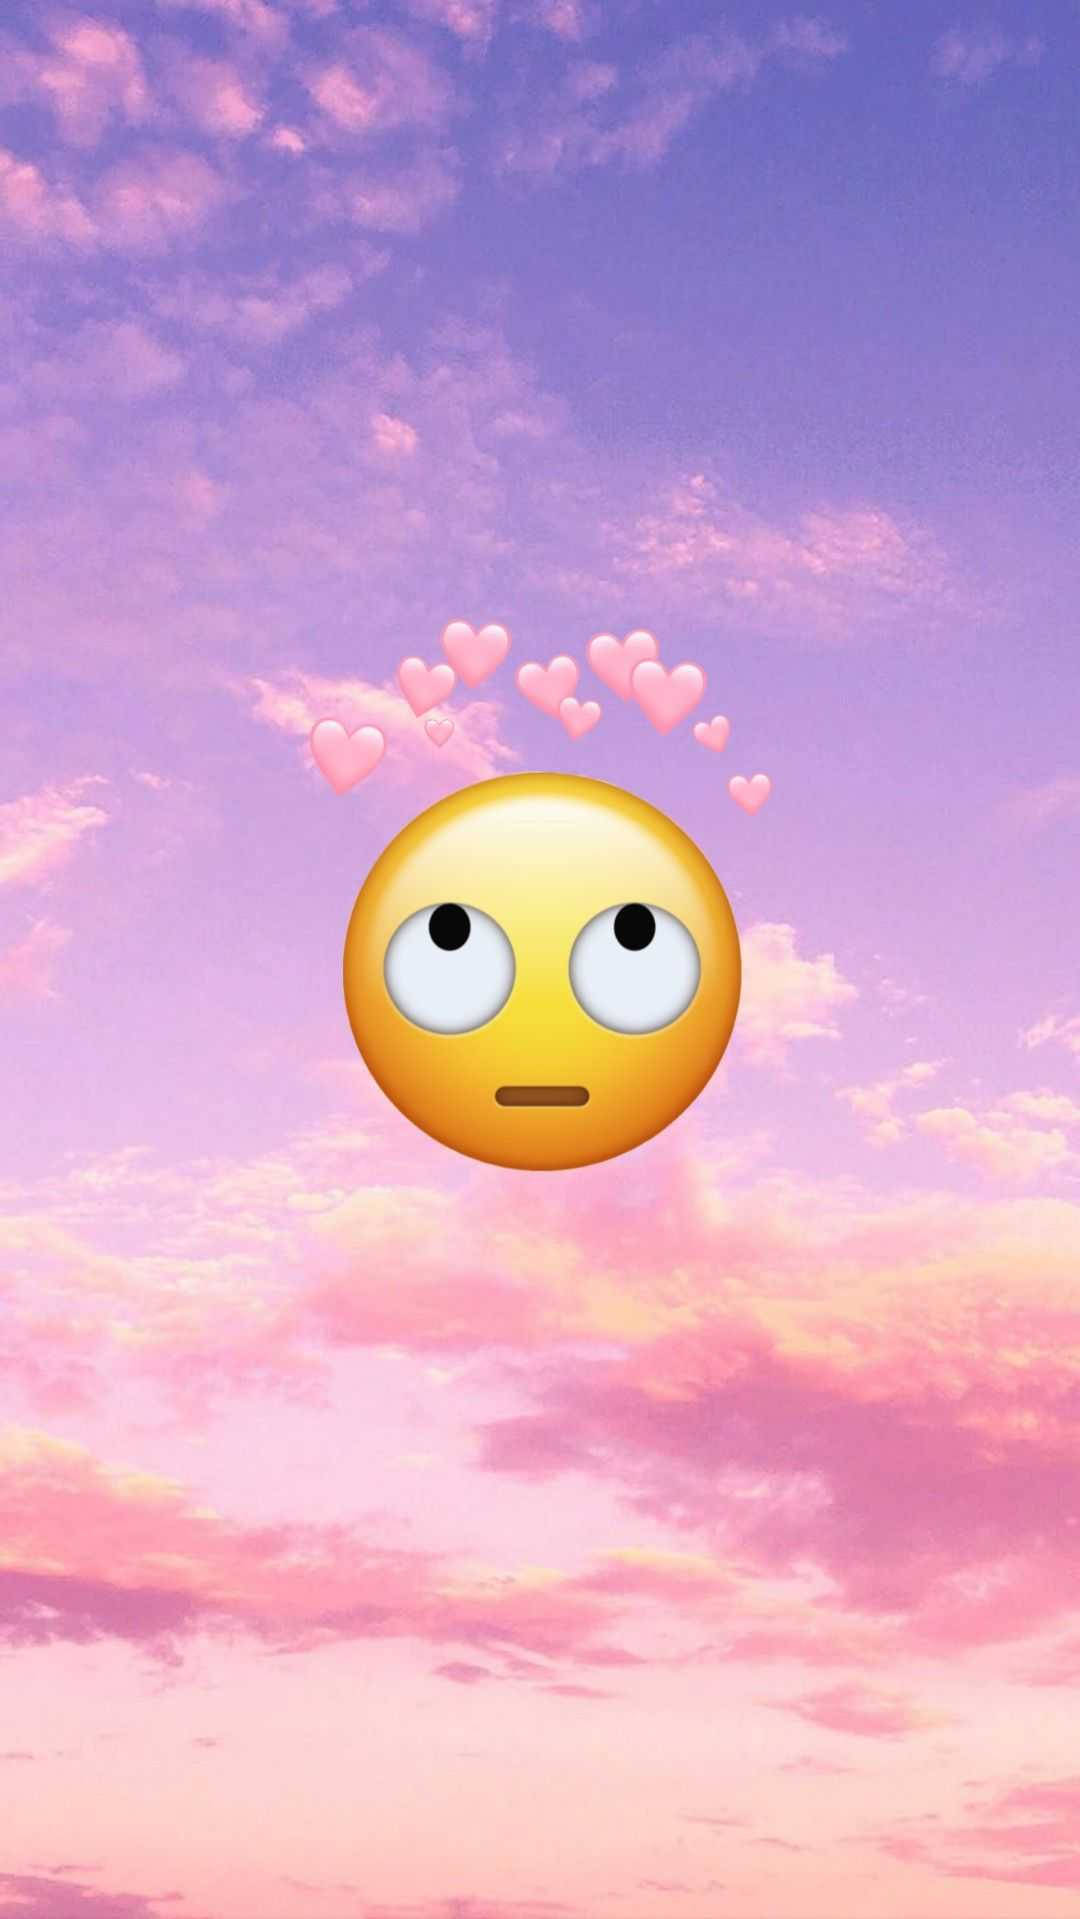 1080X1919 Emoji Wallpaper and Background